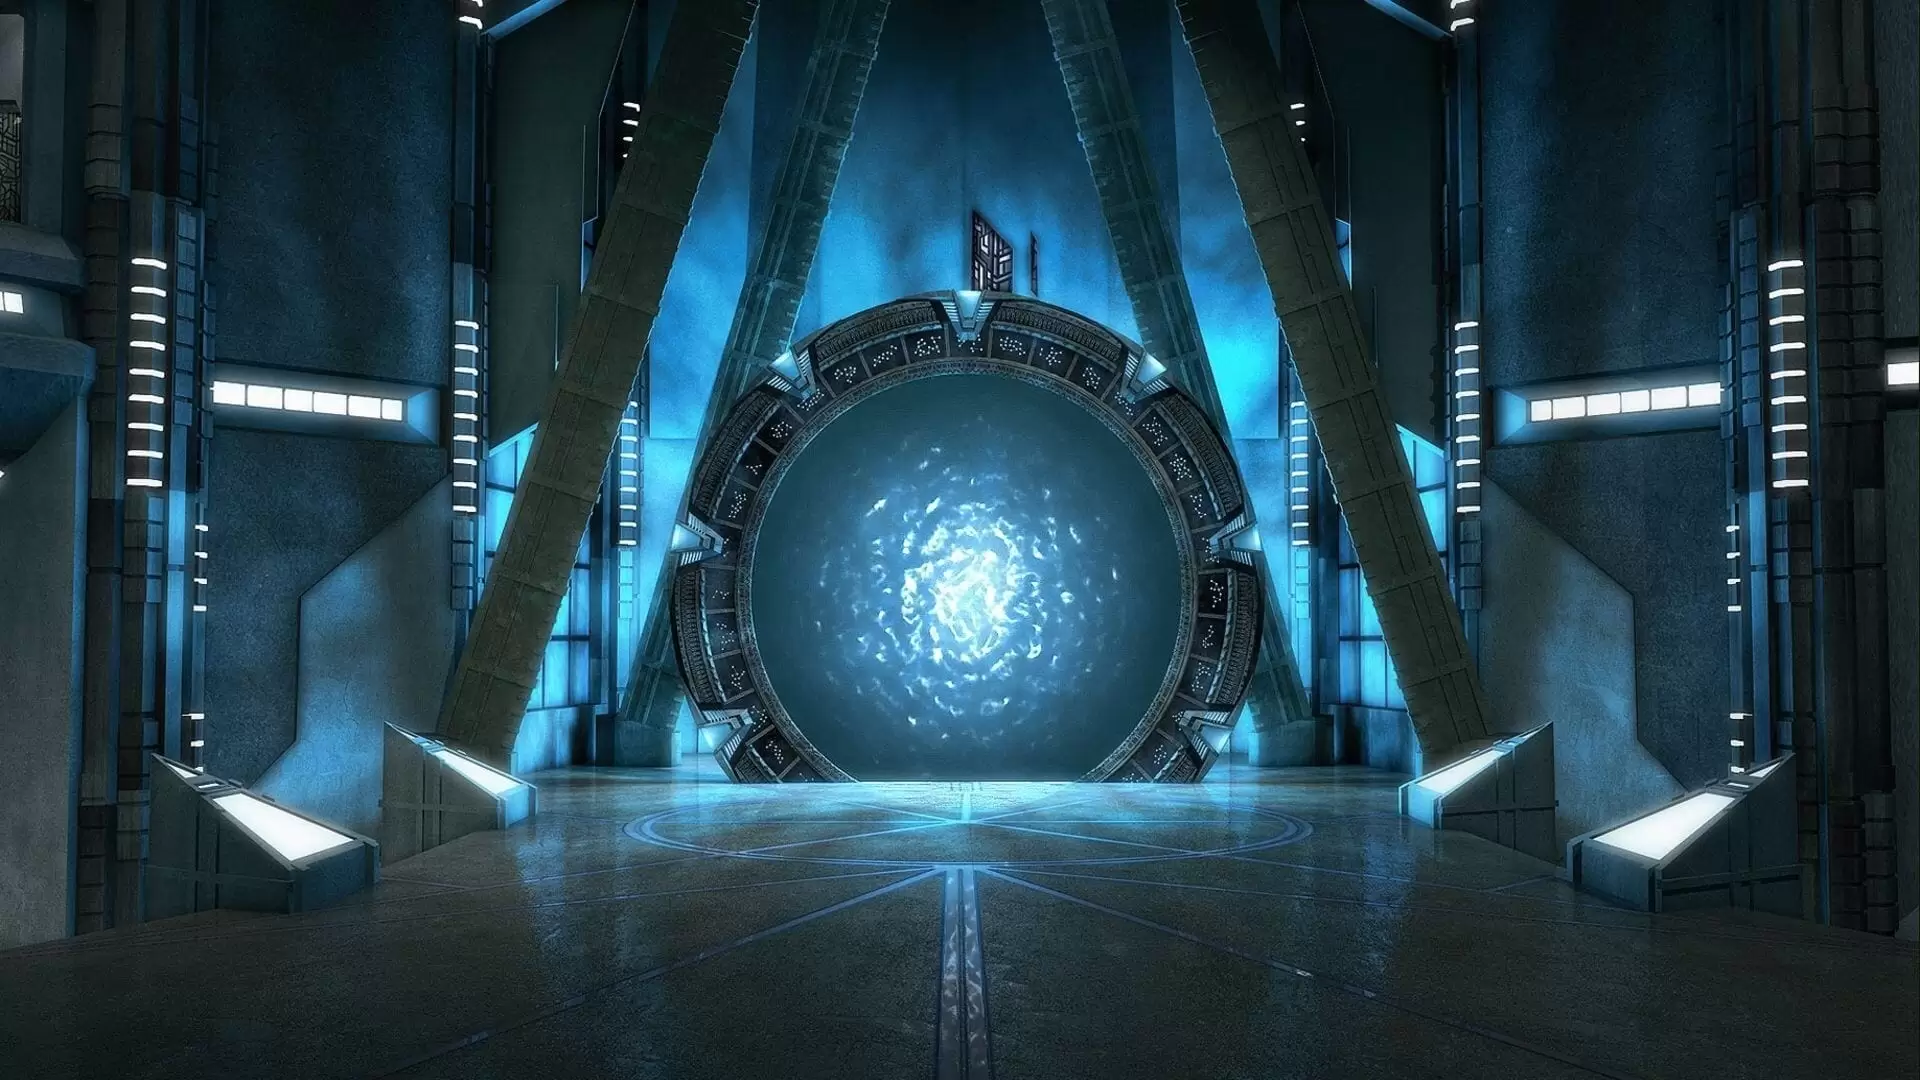 دانلود سریال Stargate: Atlantis